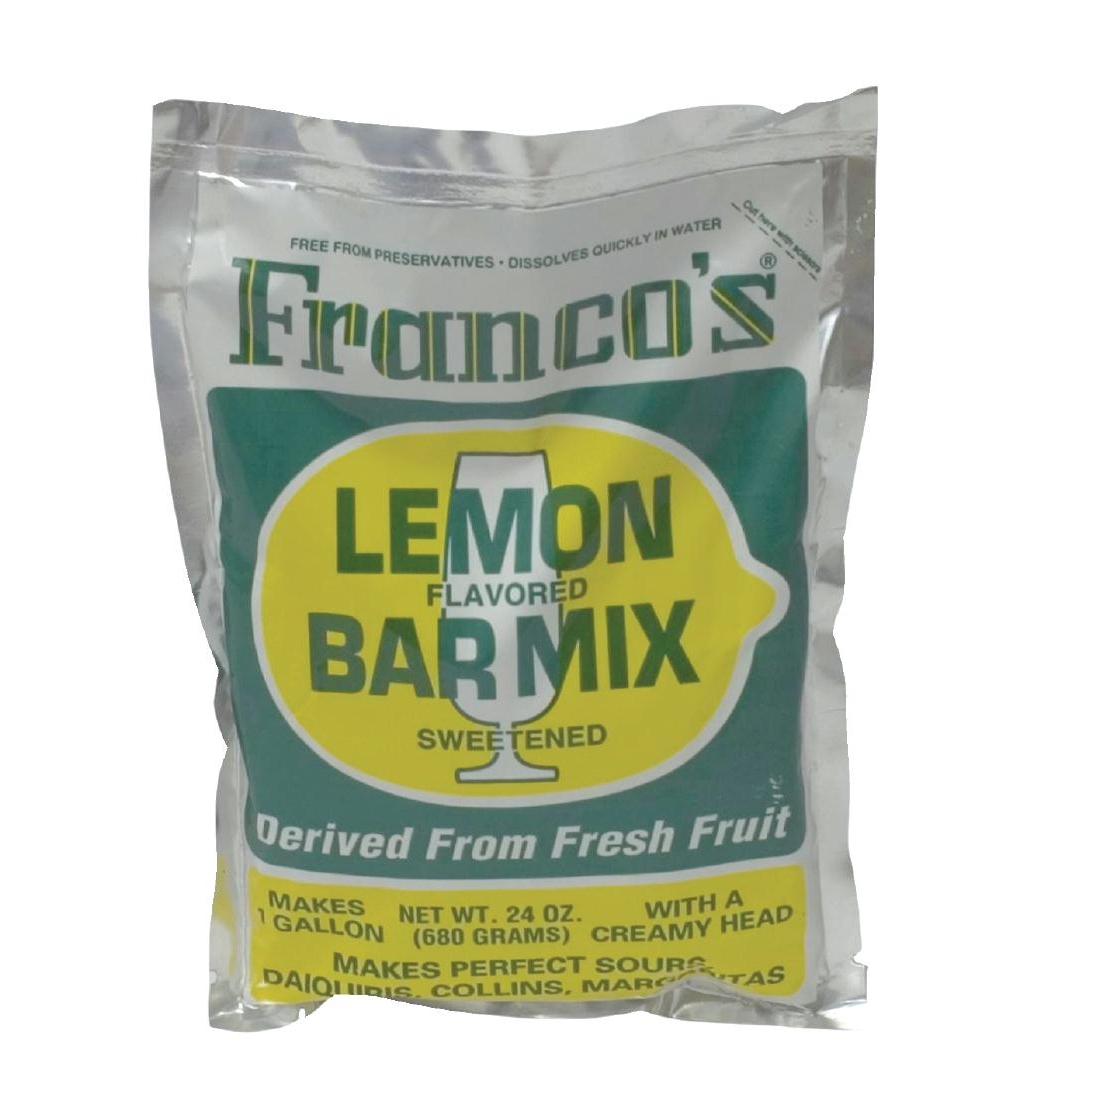 Franco's Lemon Bar Mix